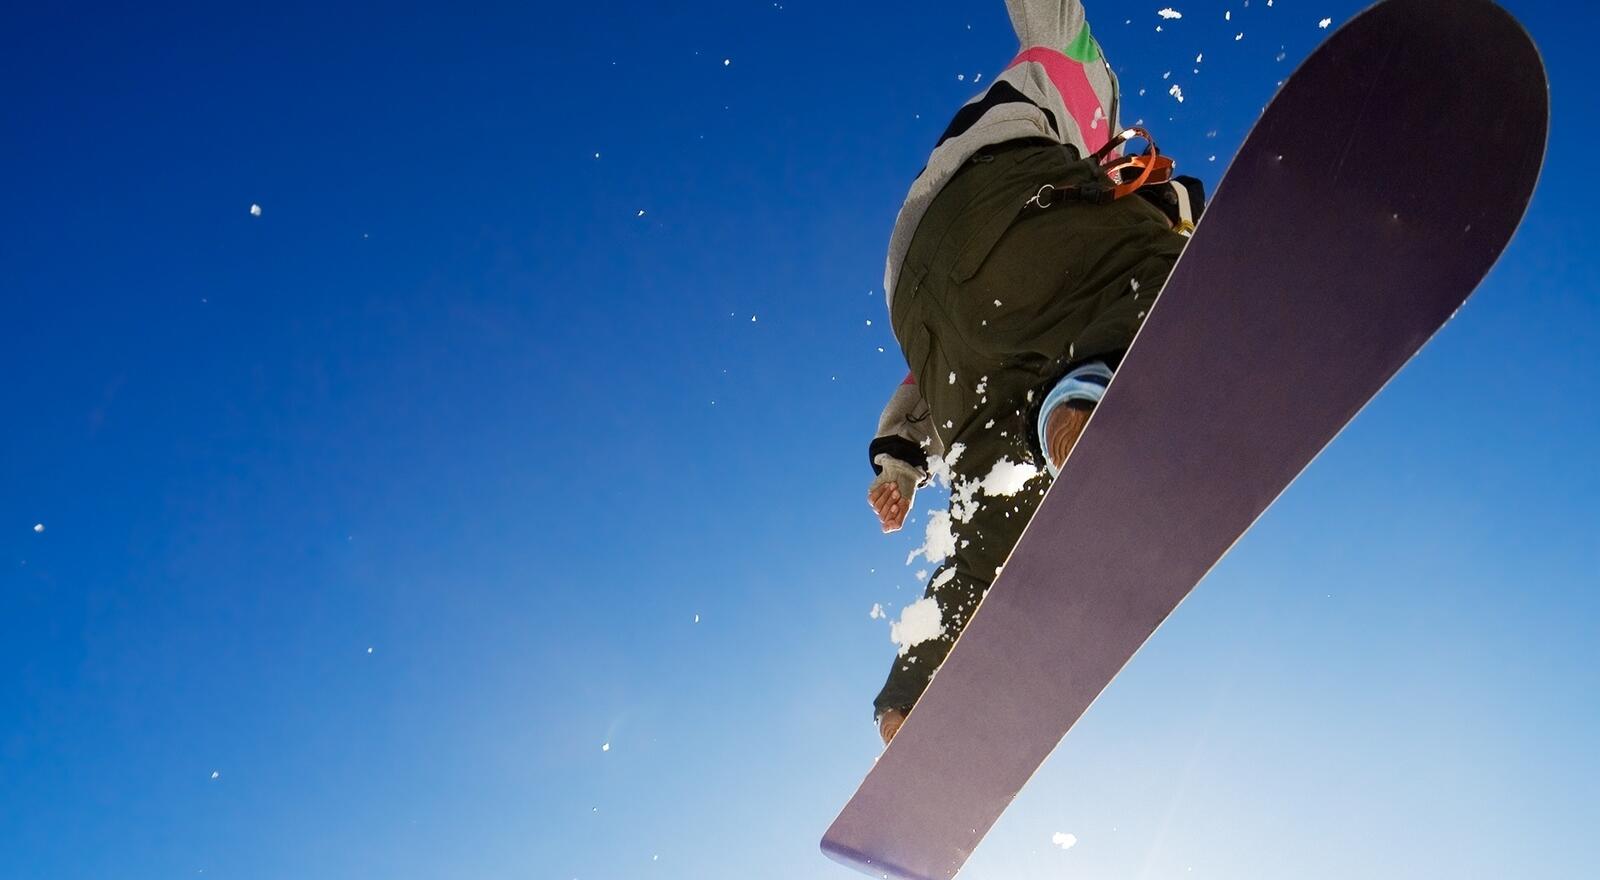 Wallpapers snowboard board jump on the desktop